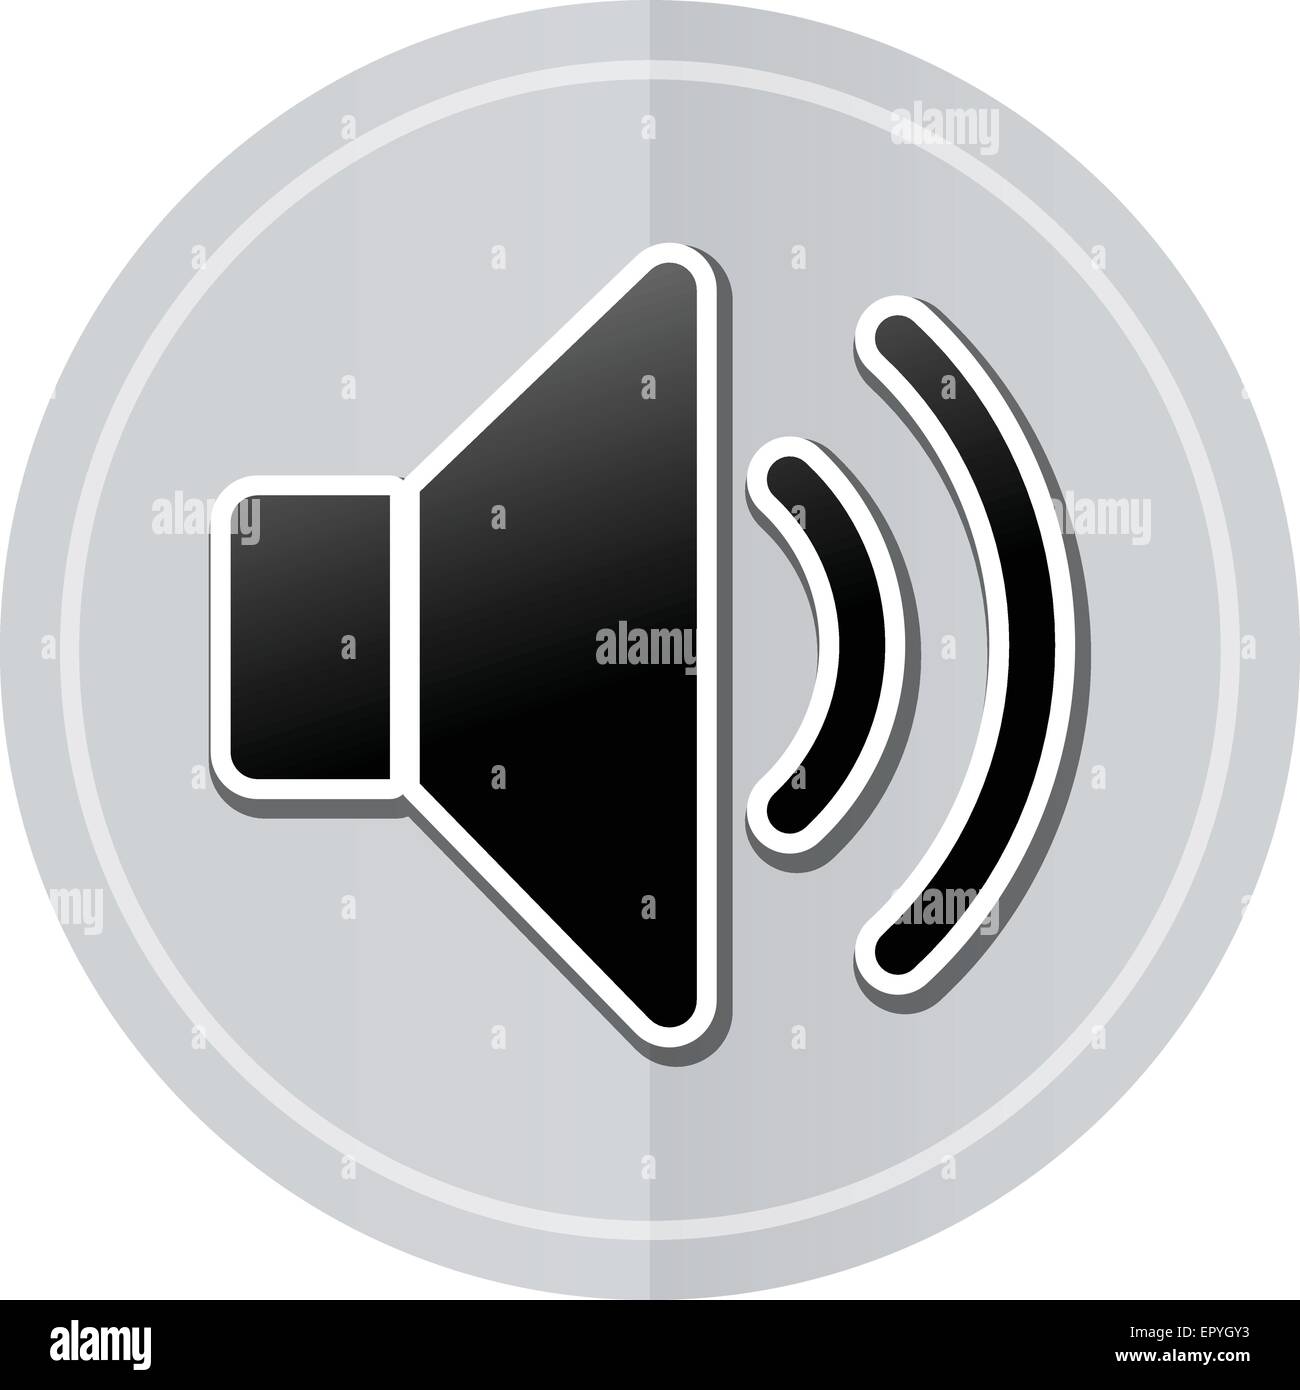 Illustration of sound sticker icon simple design Stock Vector